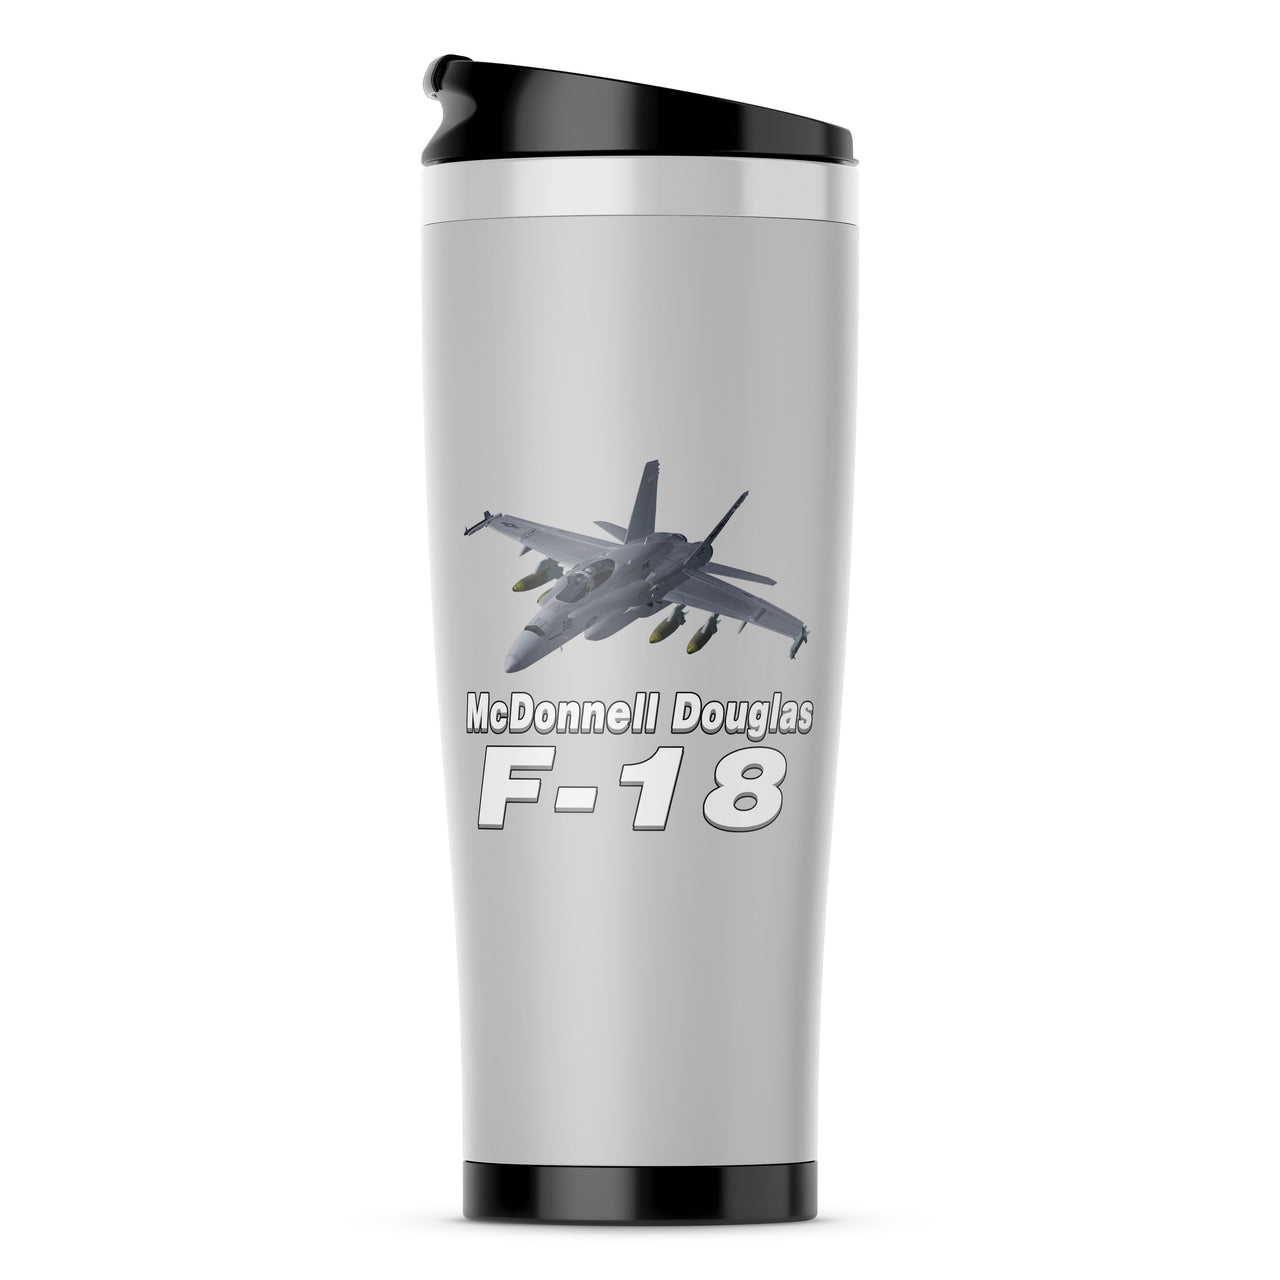 The McDonnell Douglas F18 Designed Travel Mugs